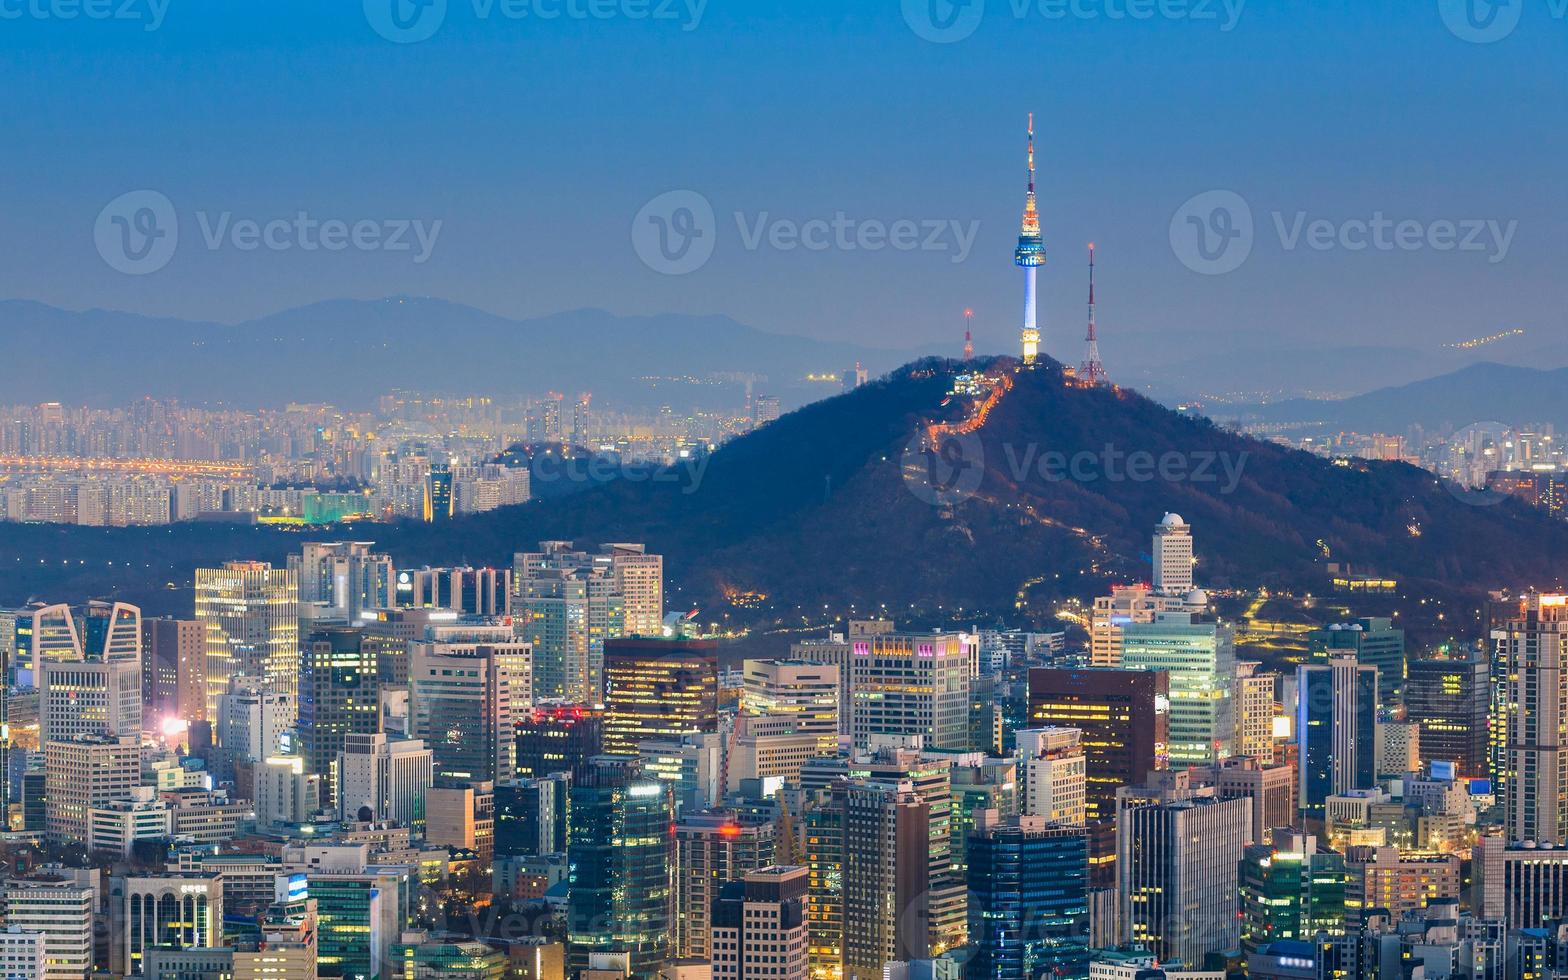 Seoul Tower overlooks a neon concrete jungle in South Korea photo